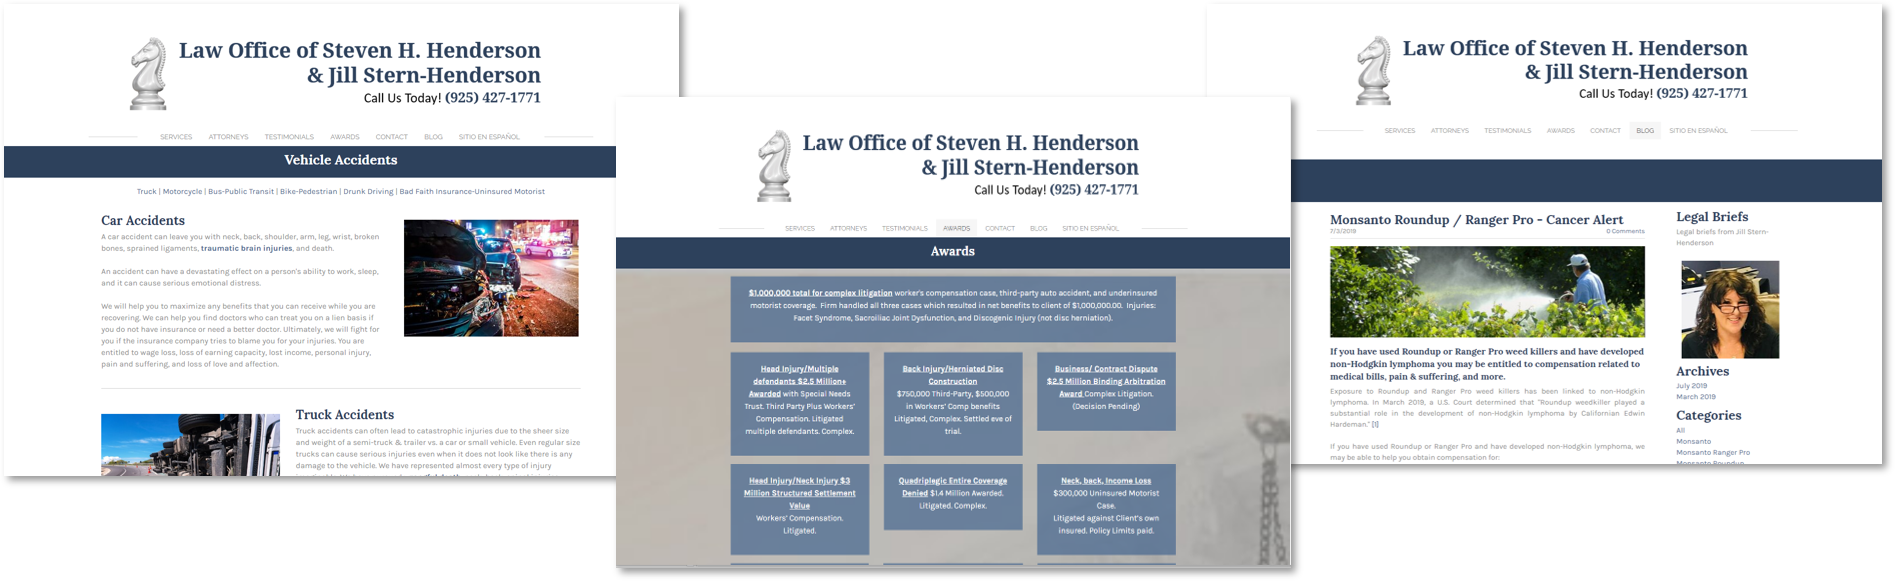 Nicolette A Munoz Consulting - Law Office of Steven H. Henderson & Jill Stern-Henderson - Website